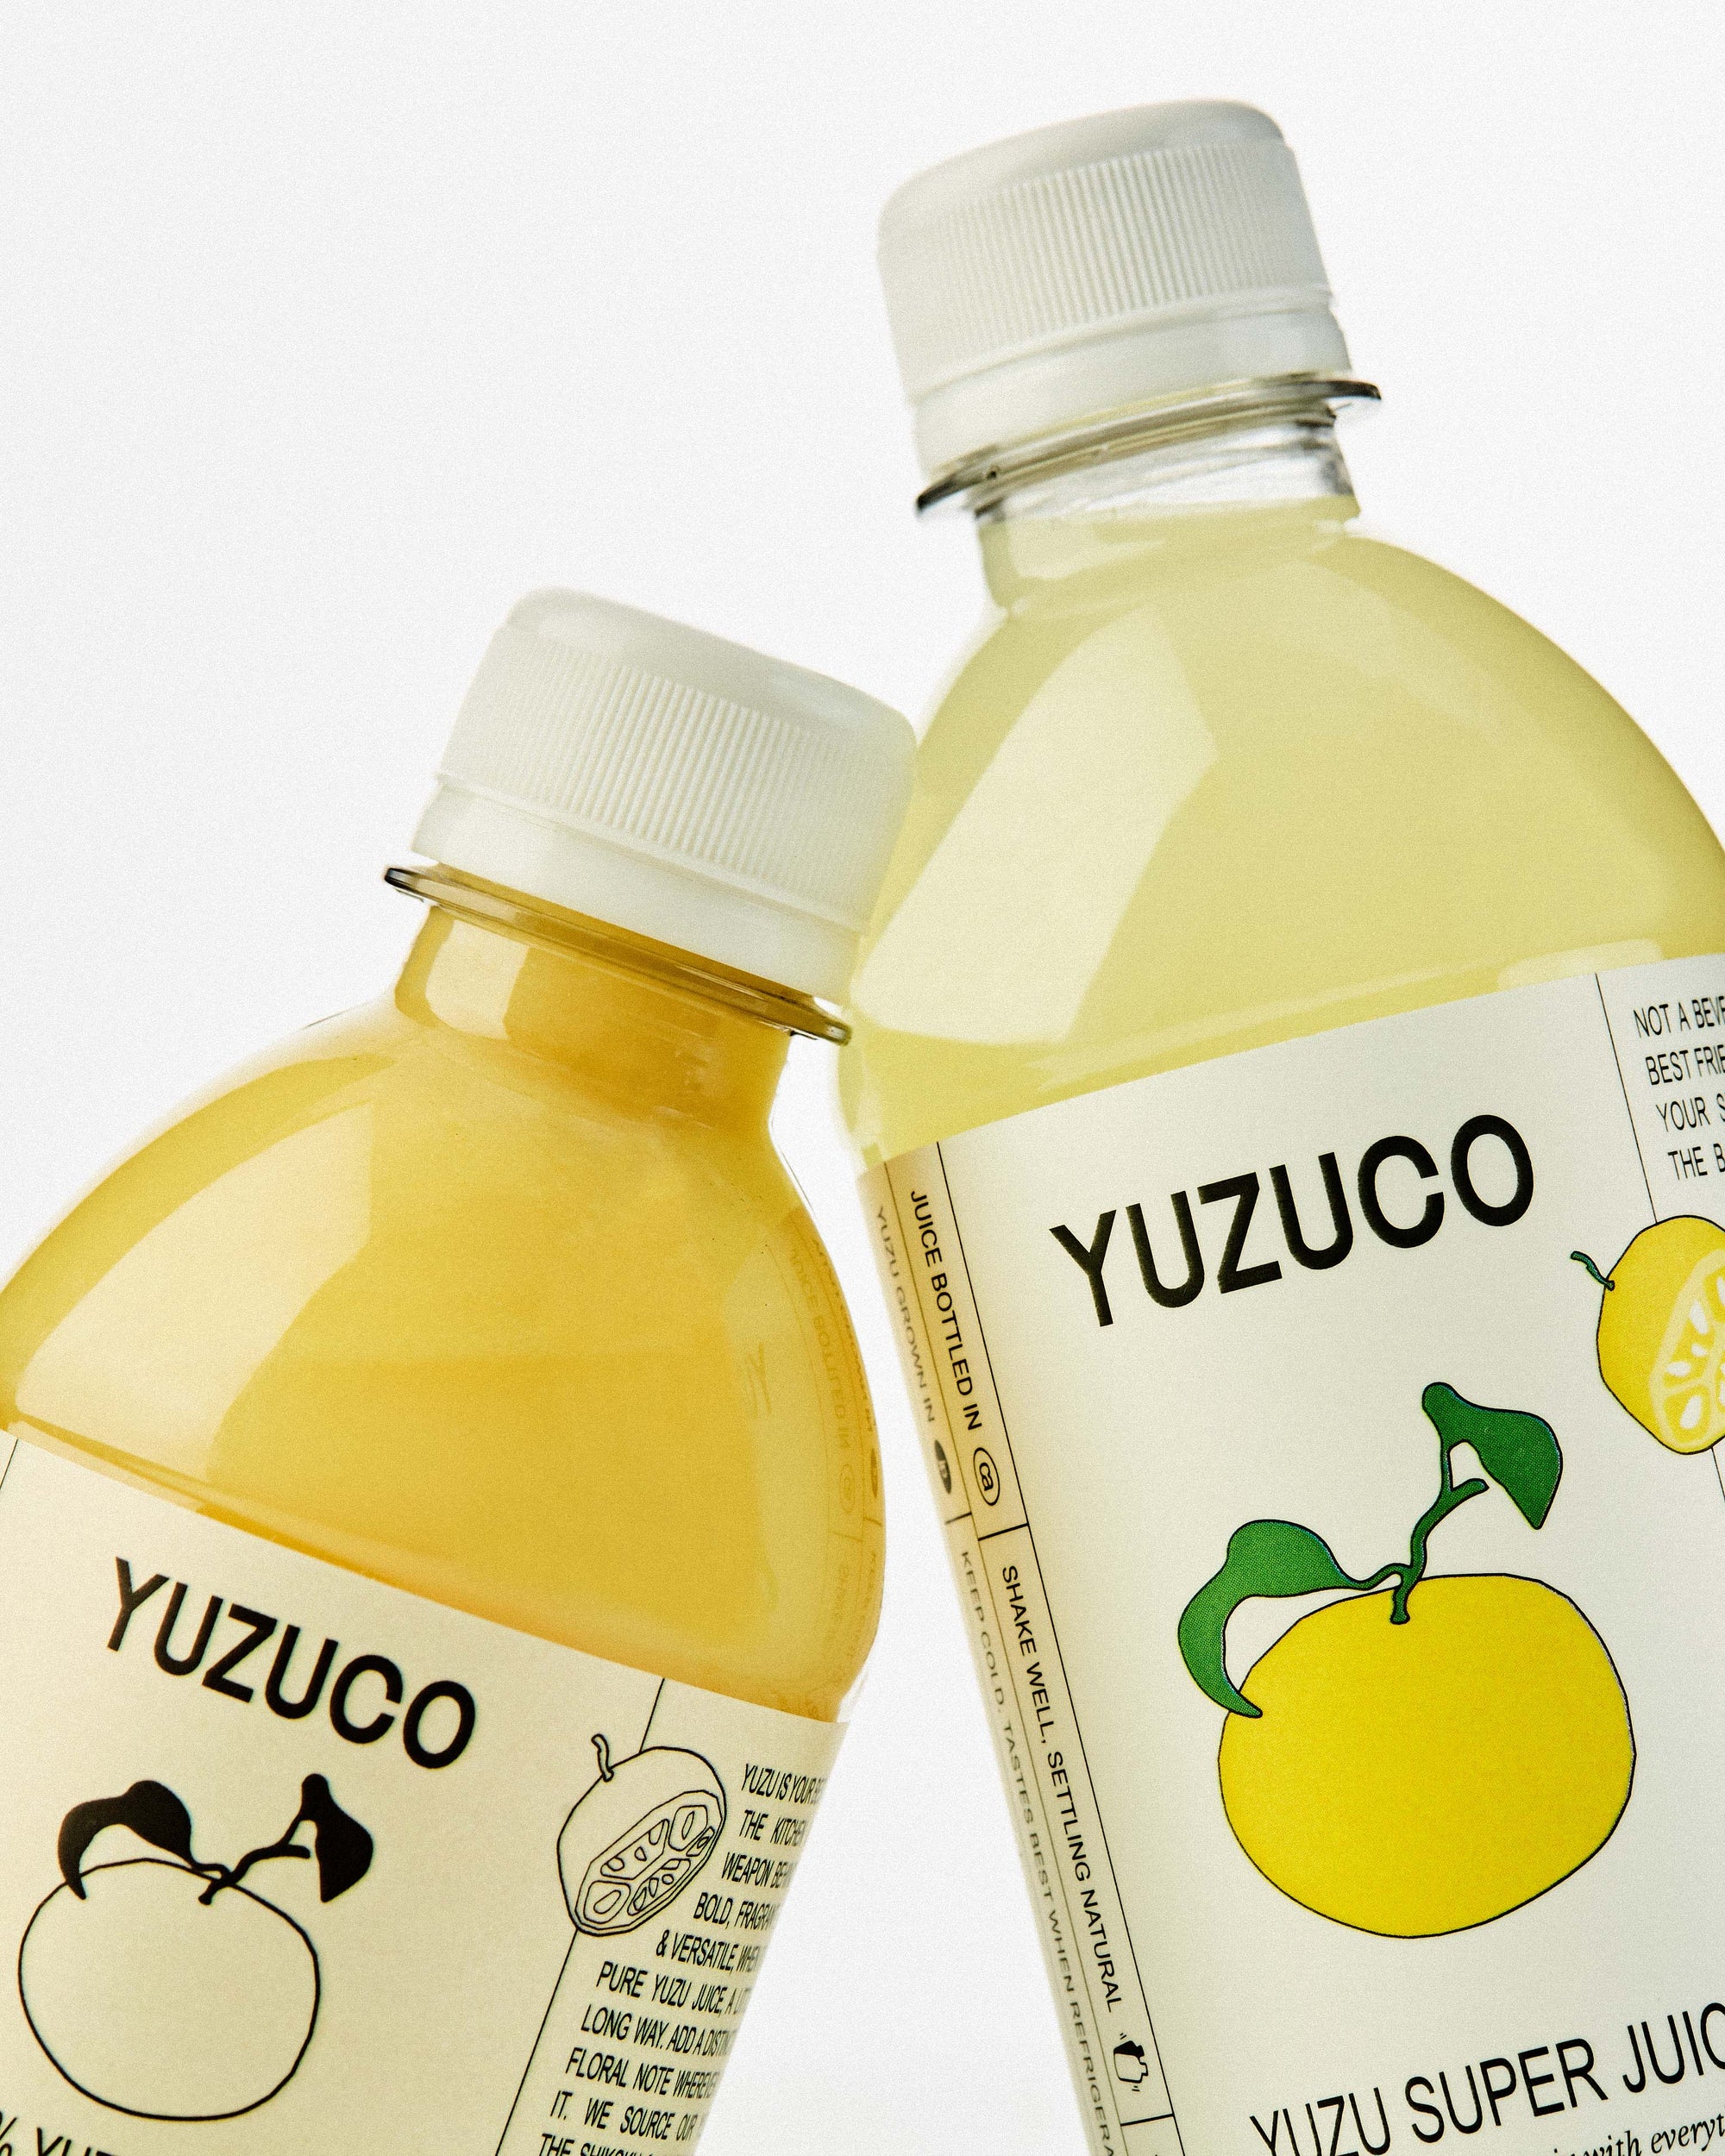 yuzuco yuzu super juice and 100% yuzu juice